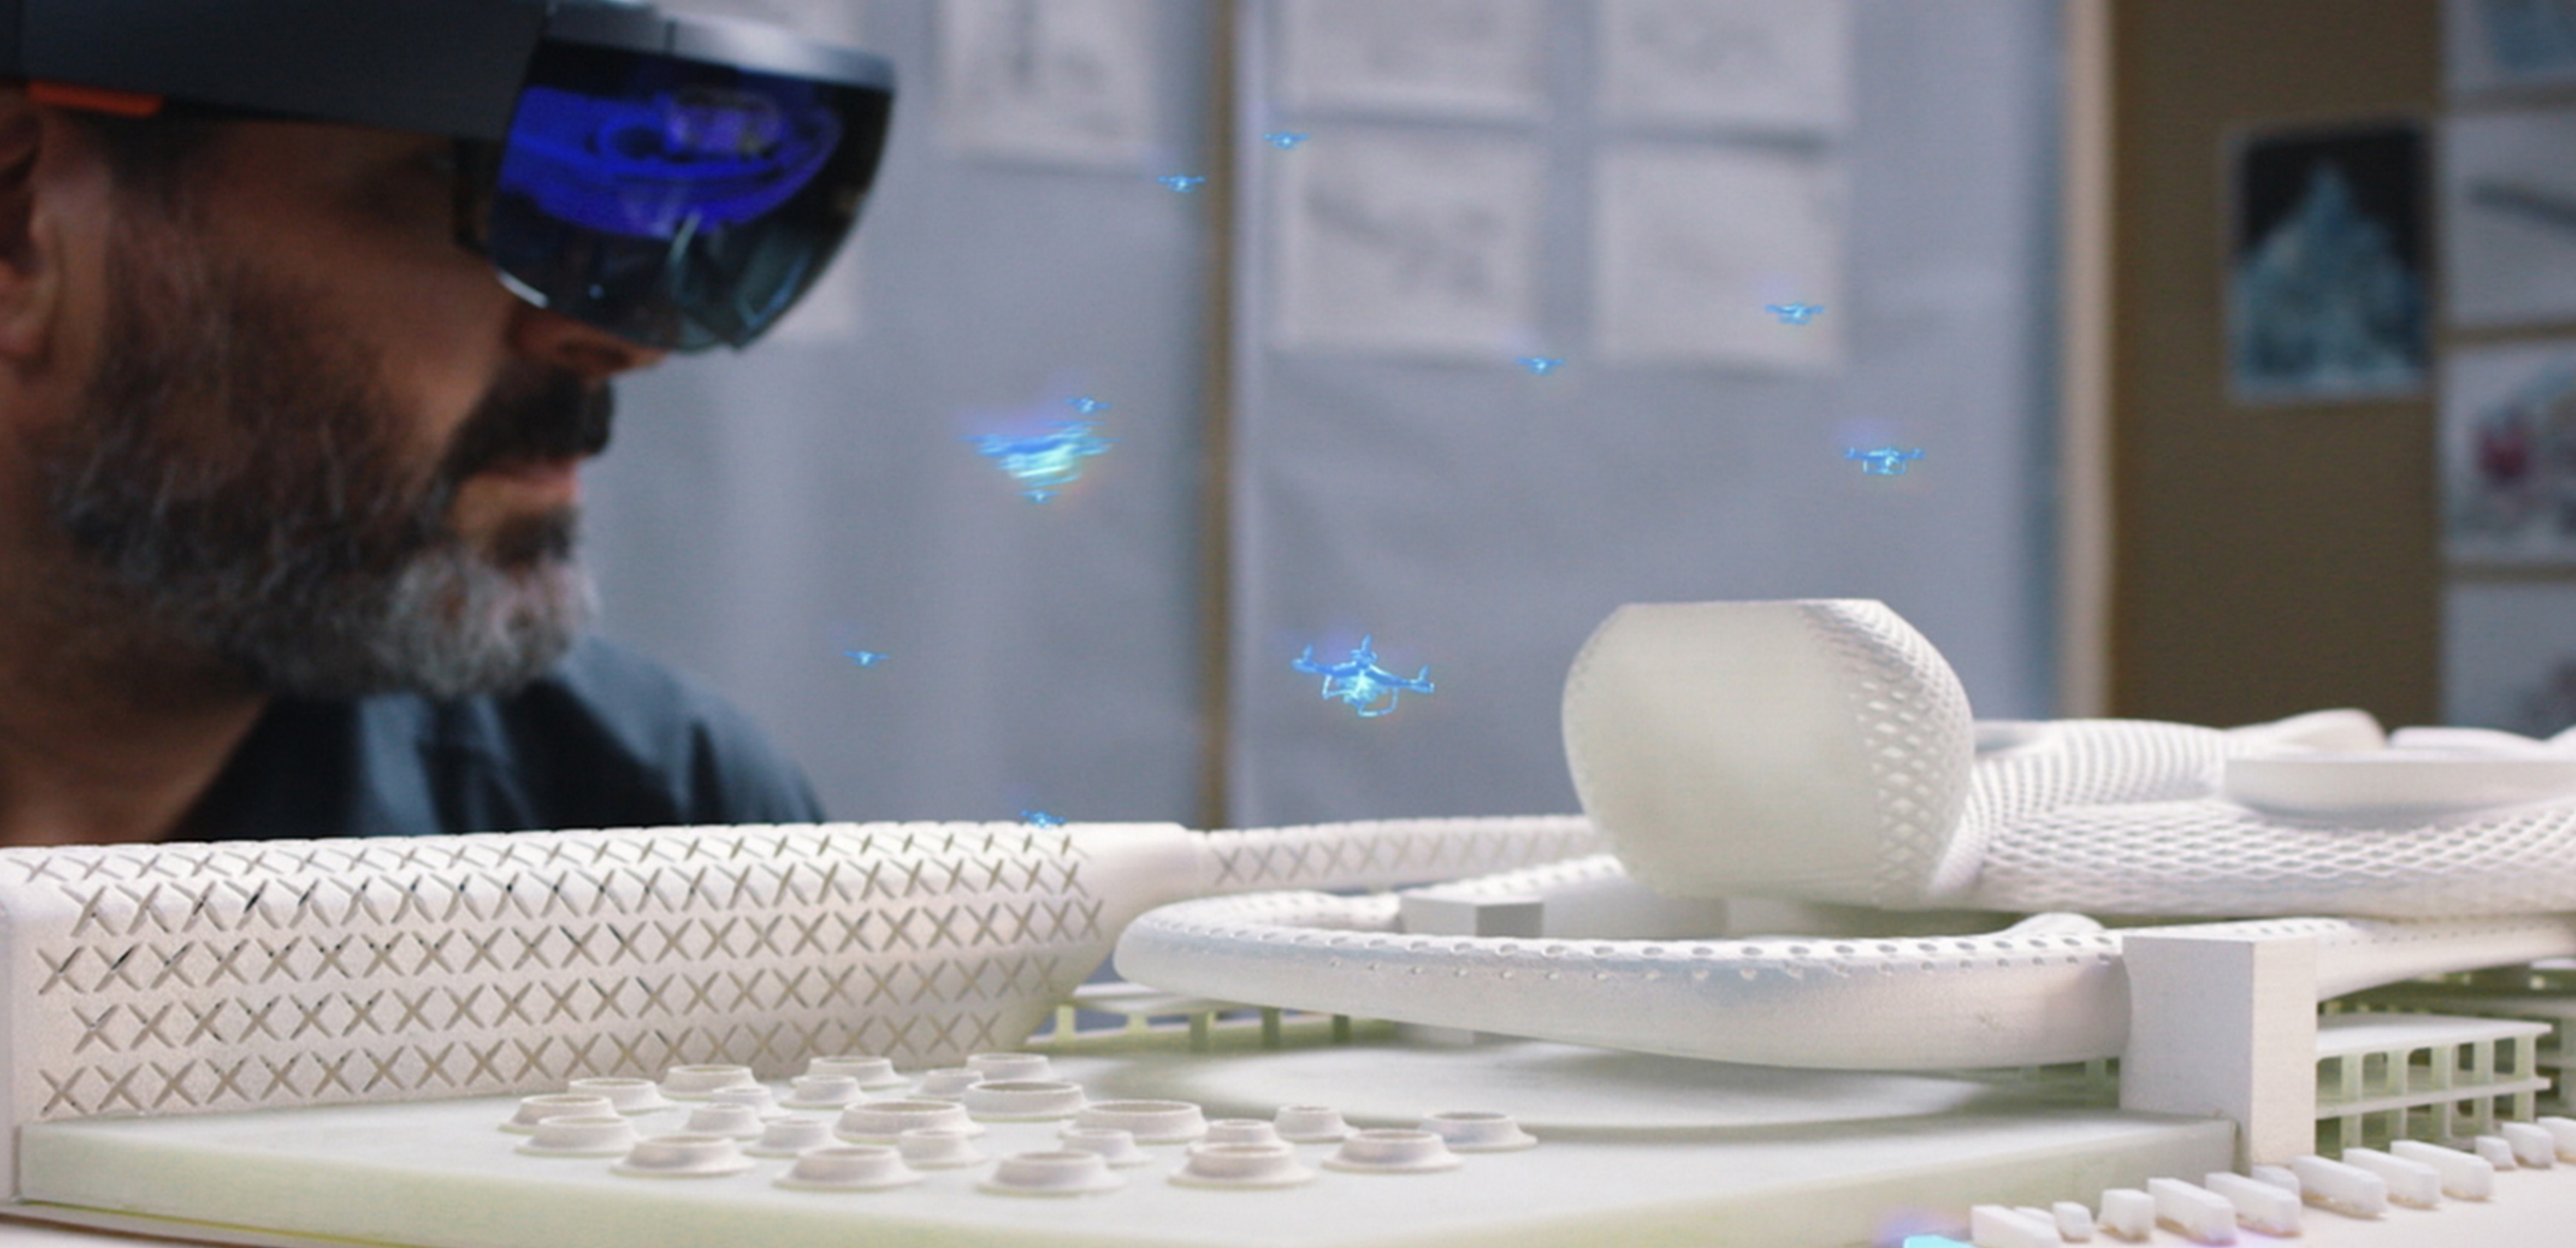 Architect Greg Lynn uses HoloLens, Trimble technology at Venice Biennale